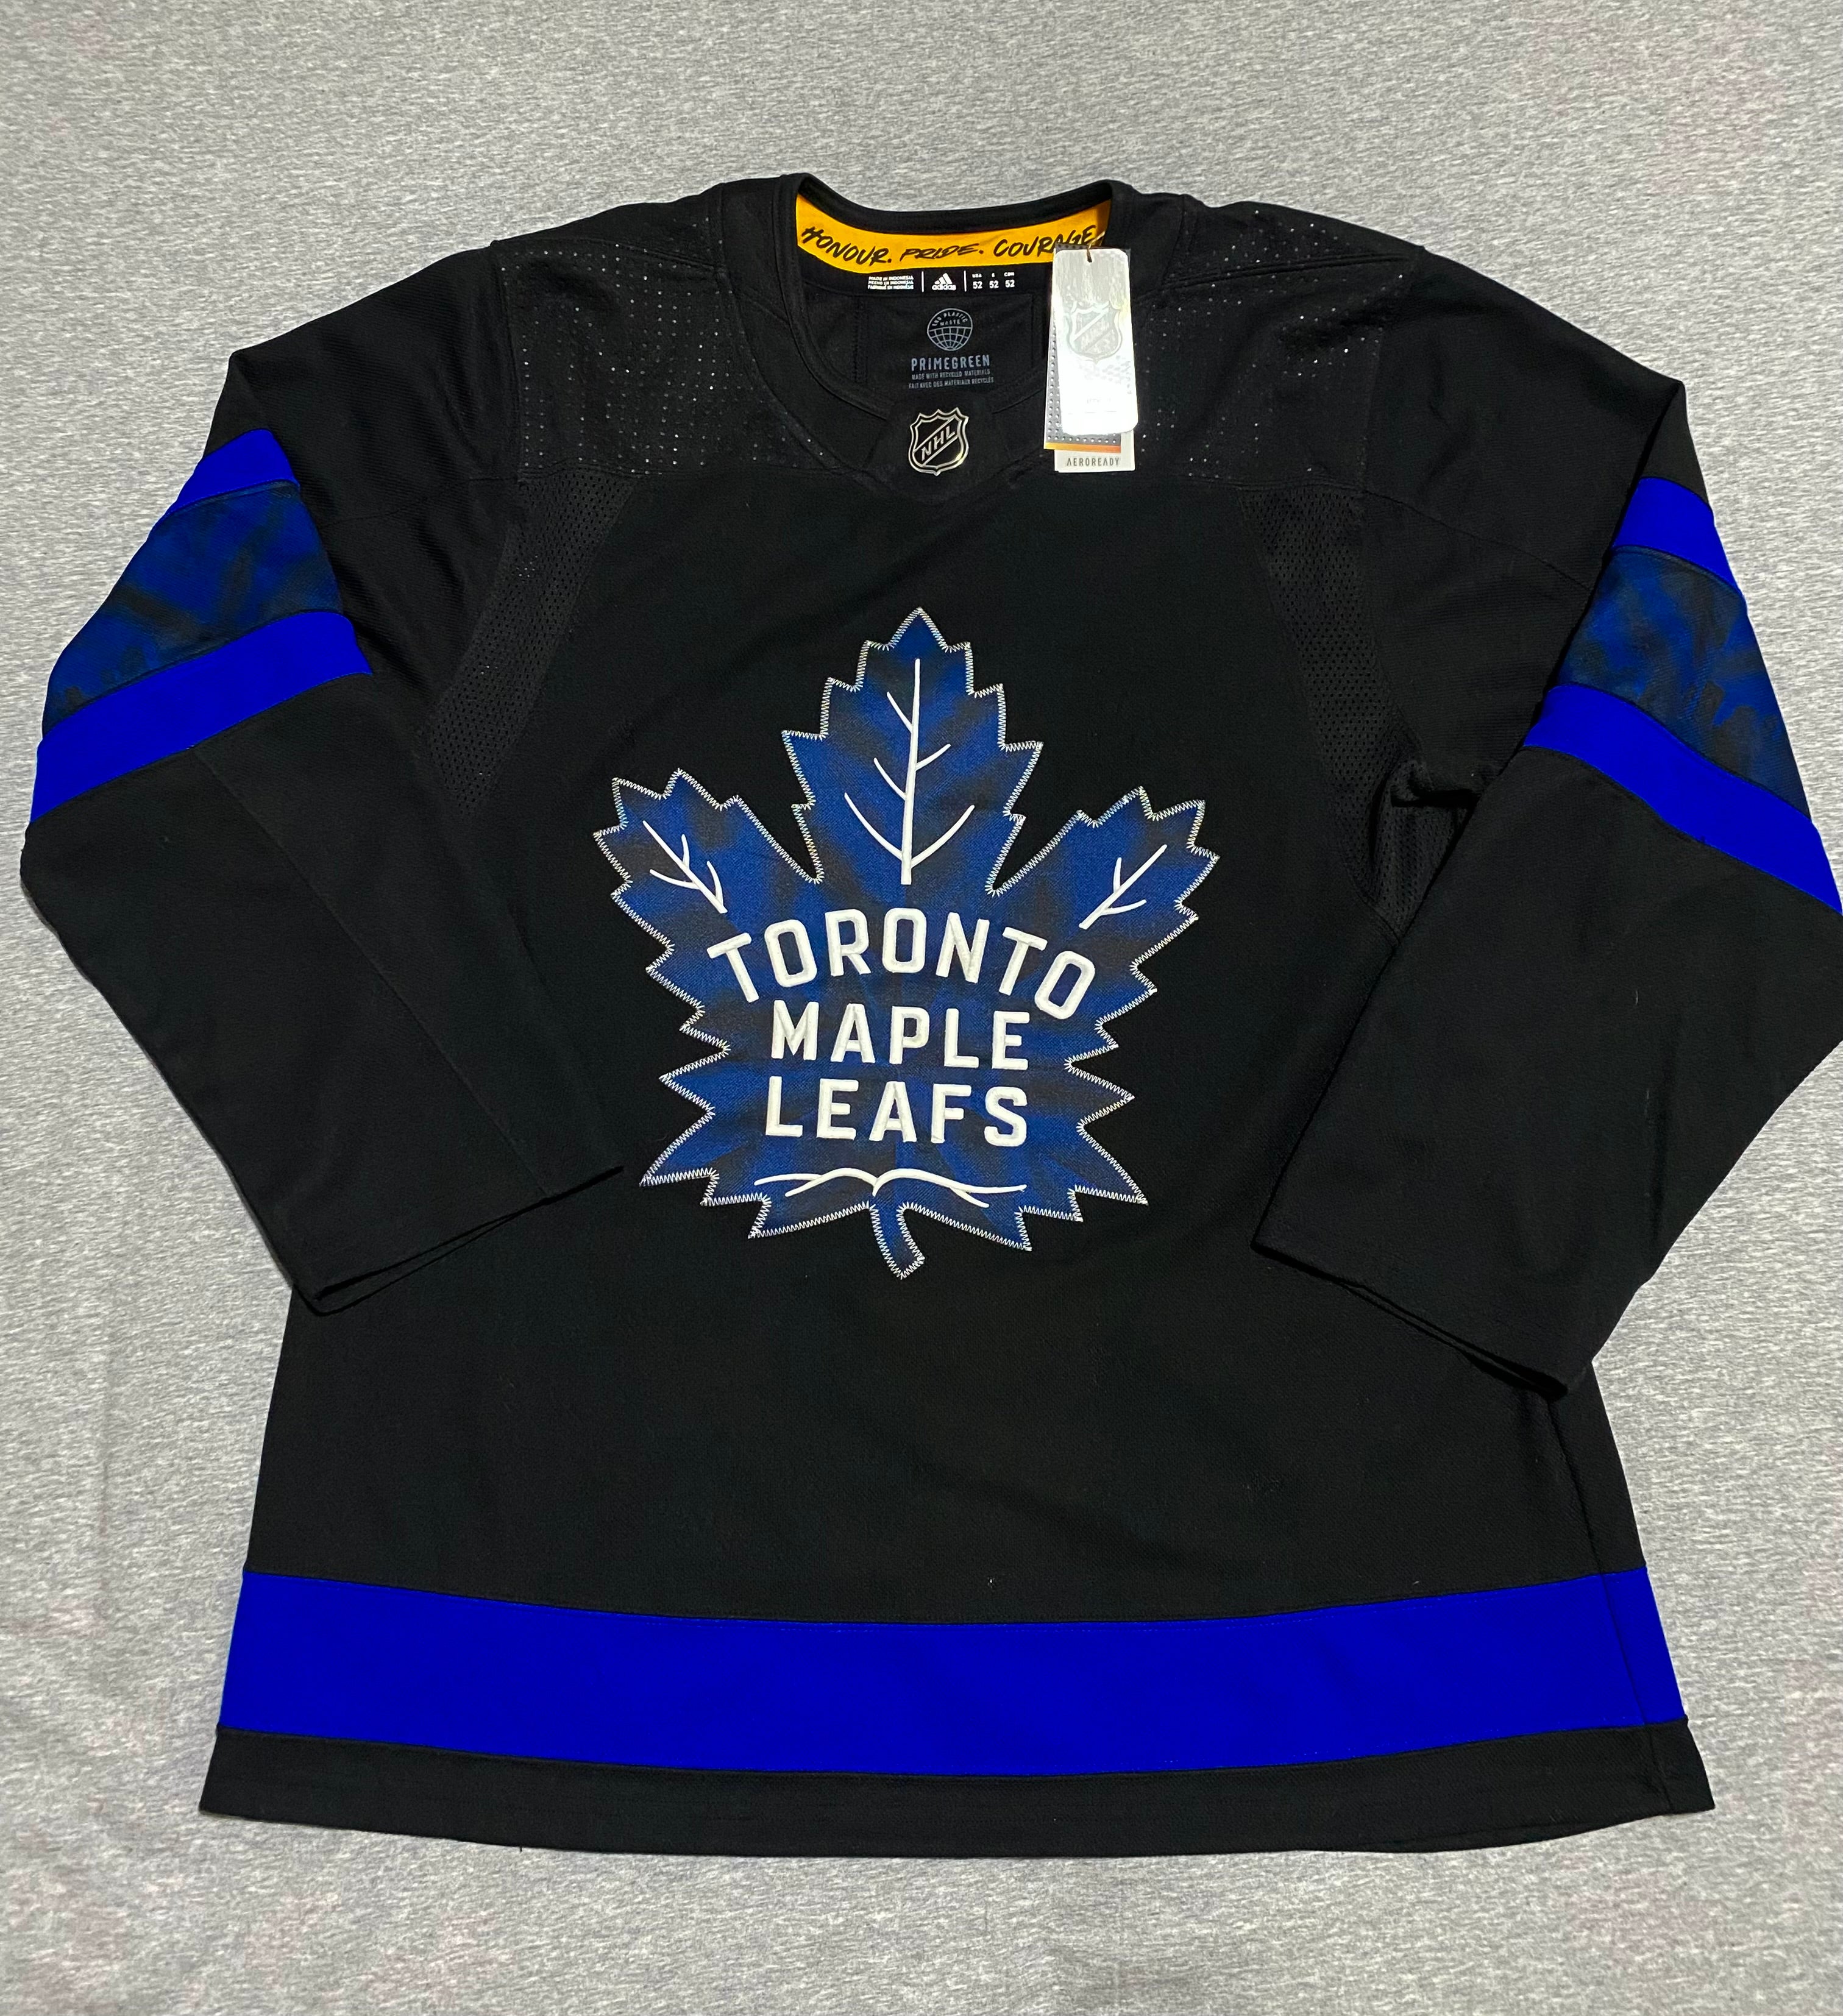 Toronto Maple Leafs x drew house Adidas Authentic Alternate Jersey Size 52